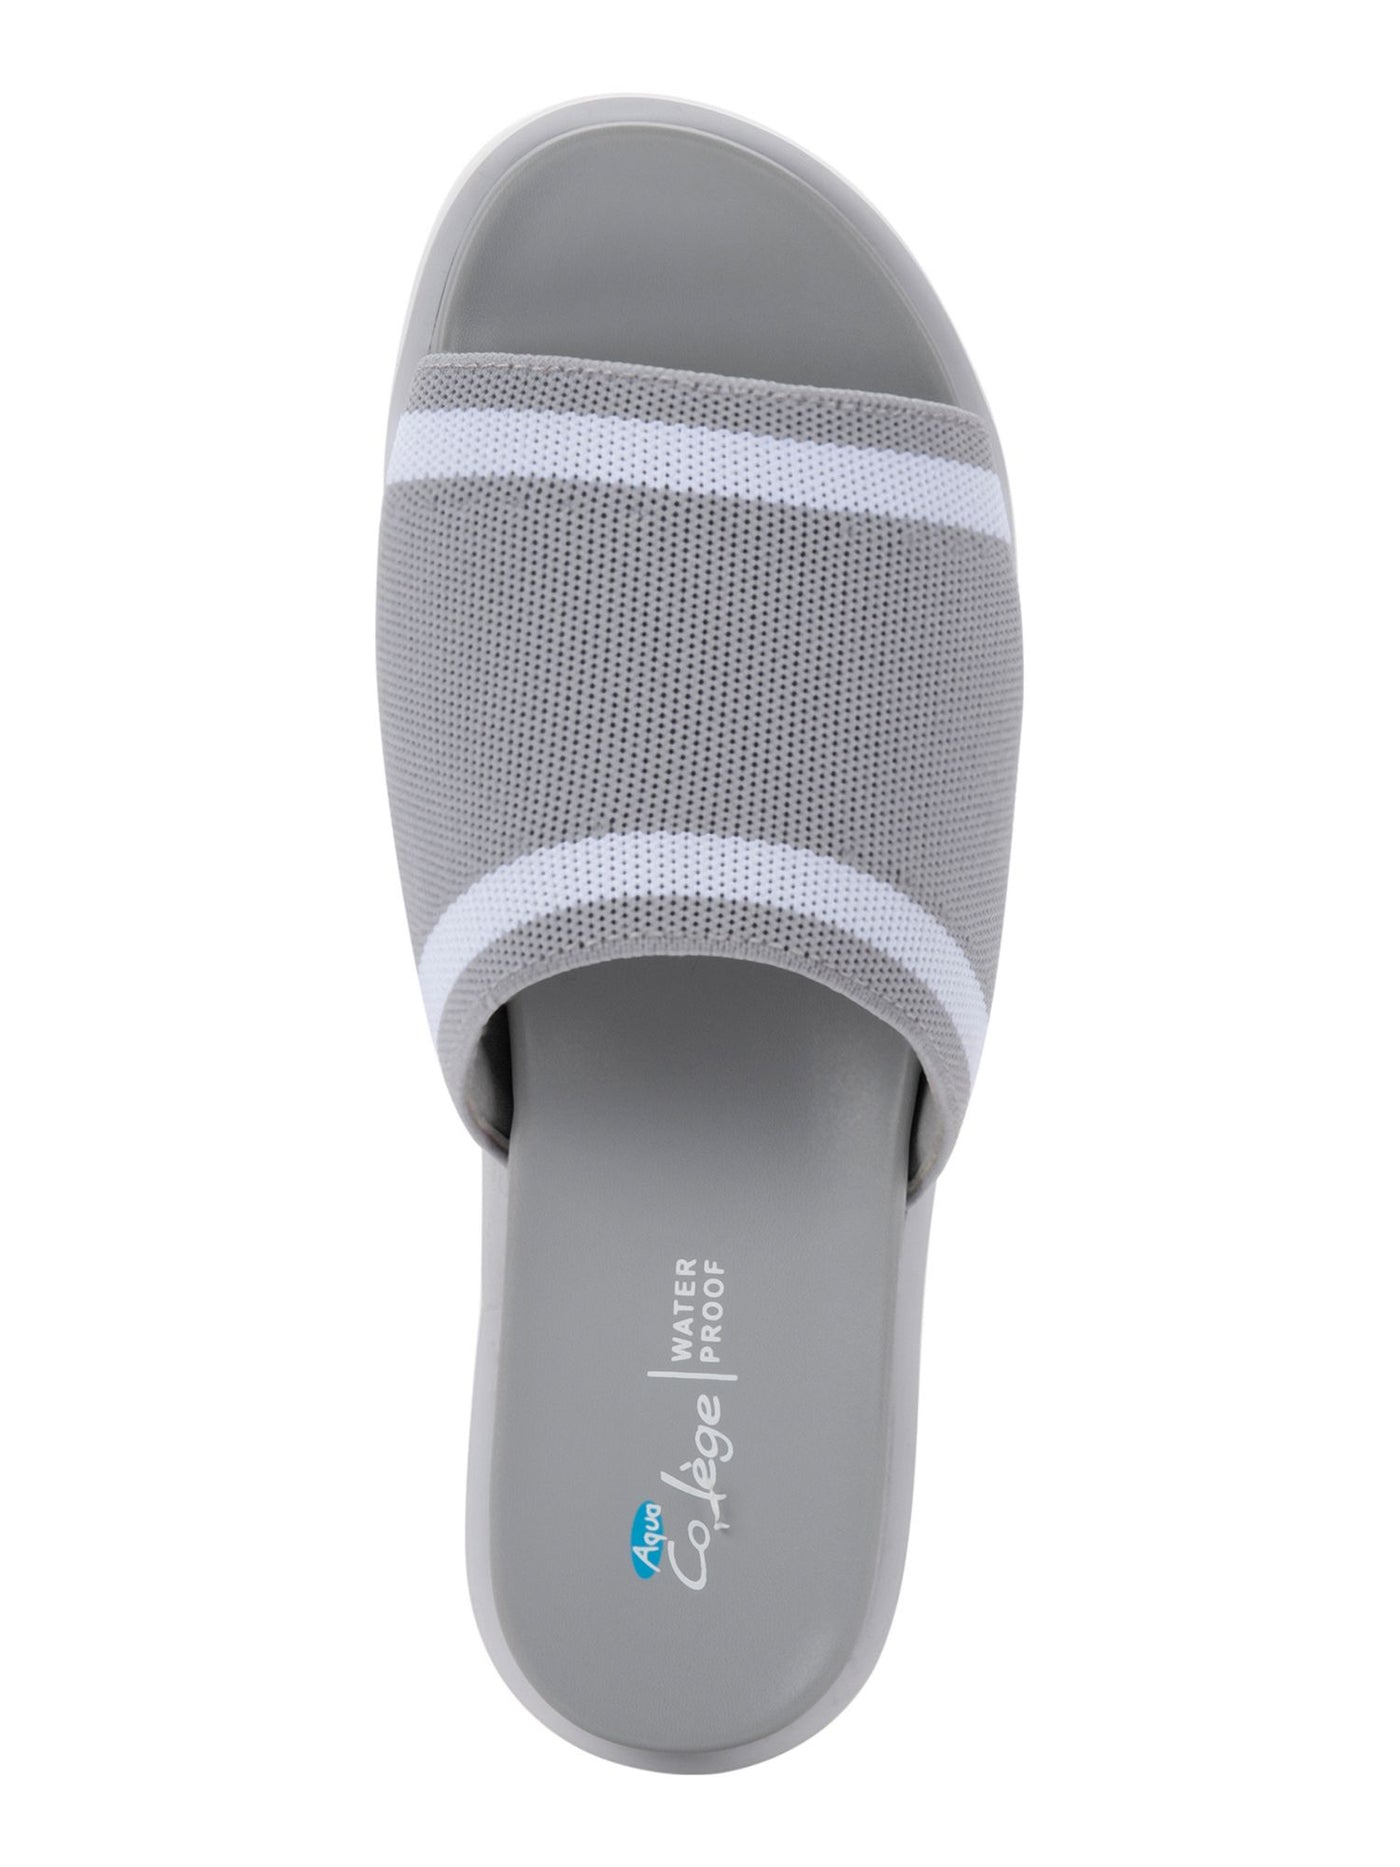 AQUA COLLEGE Womens Gray Waterproof Katalina Round Toe Slide Sandals Shoes 9.5 M